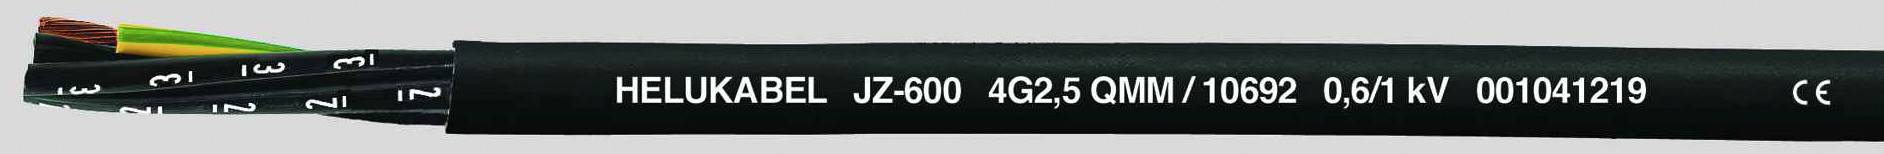 HELUKABEL JZ-600 Steuerleitung 5 G 1.50 mm² Schwarz 10661 100 m